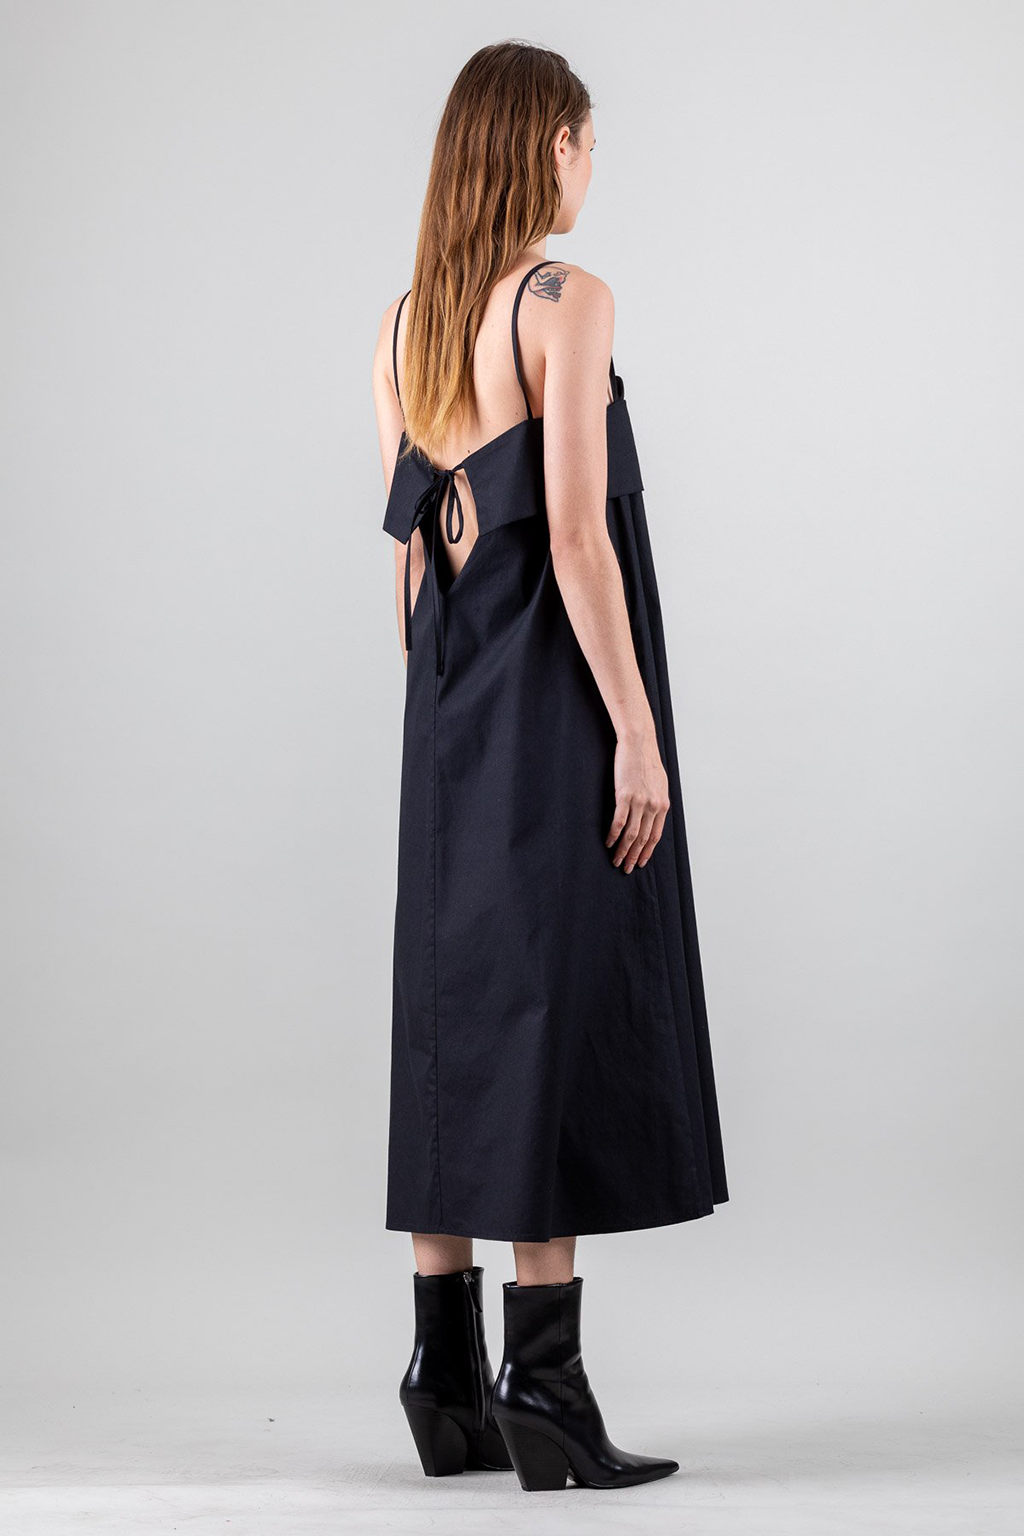 Verona Dress 2.0, Onyx Black